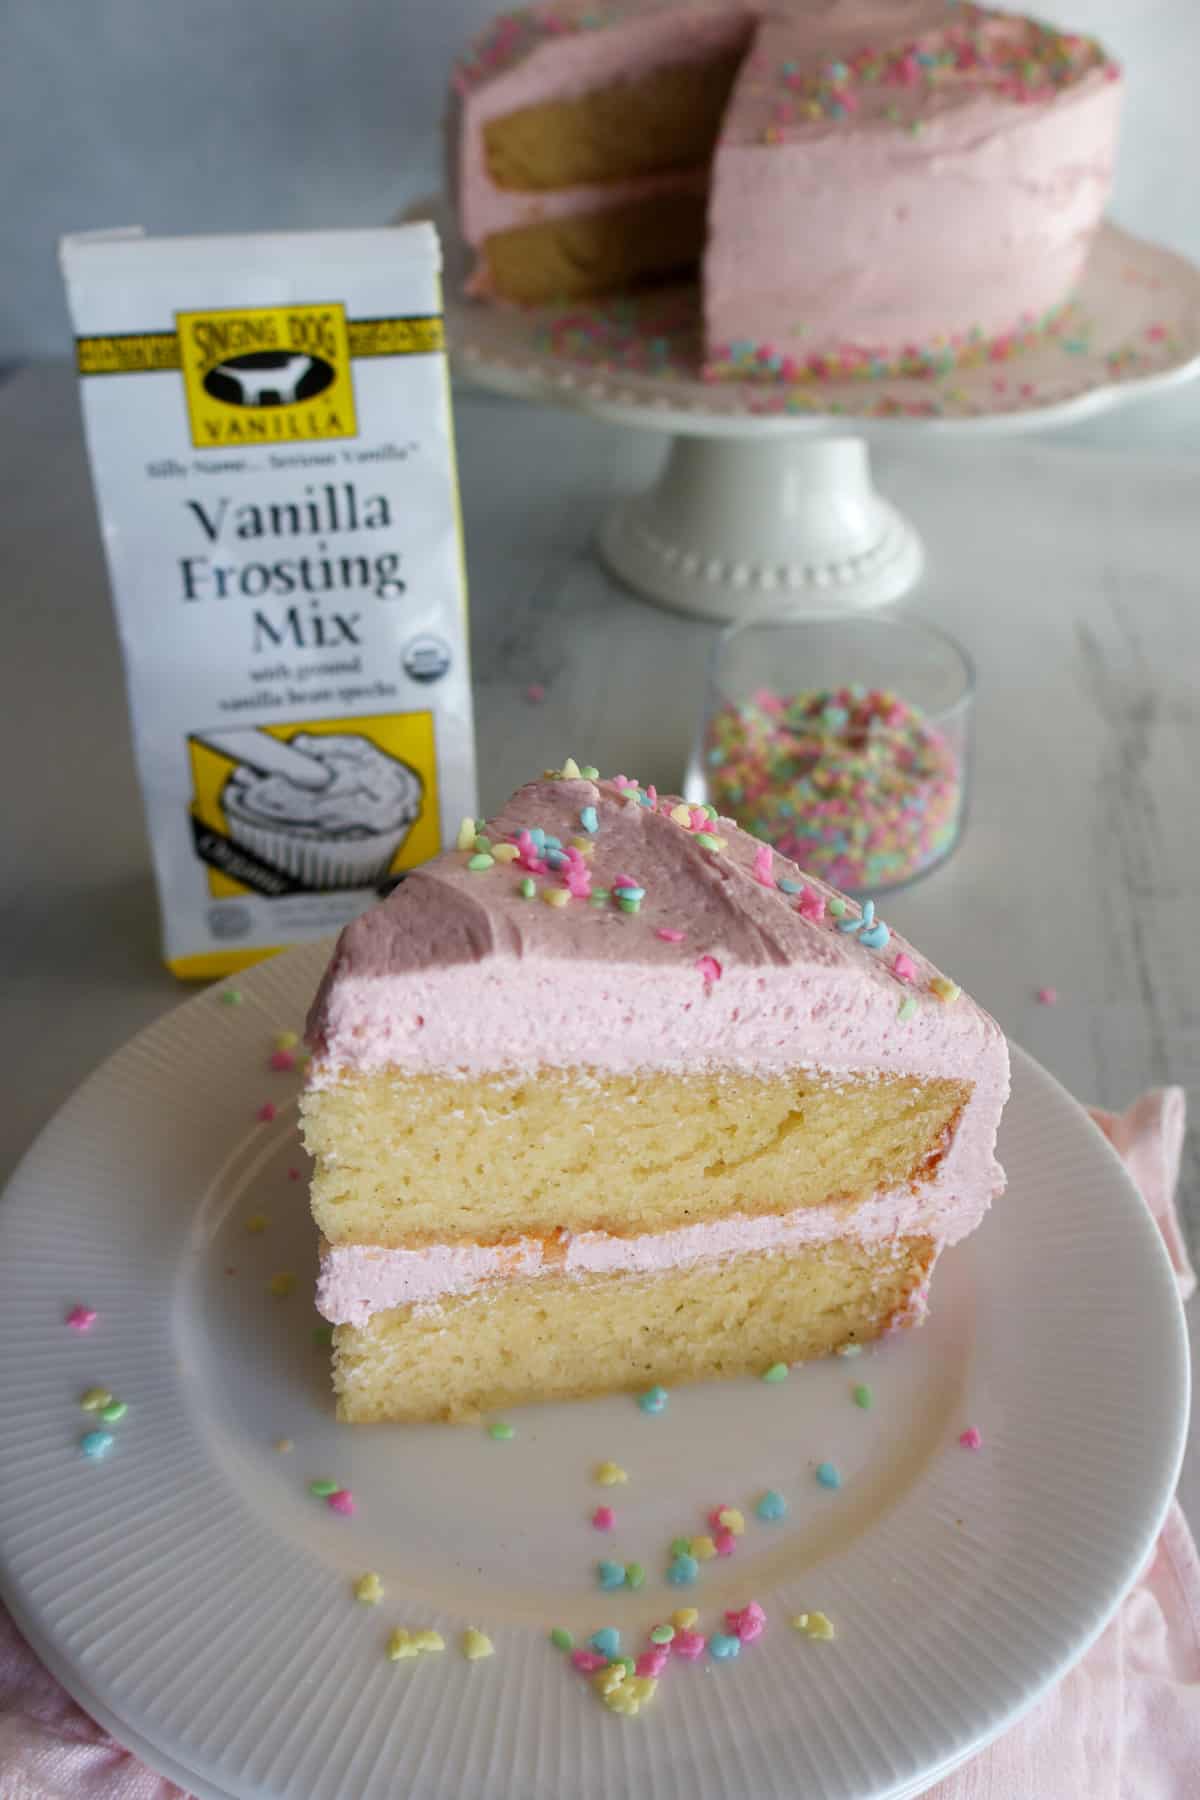 Vanilla bean cake in 3 plates with vanilla mix